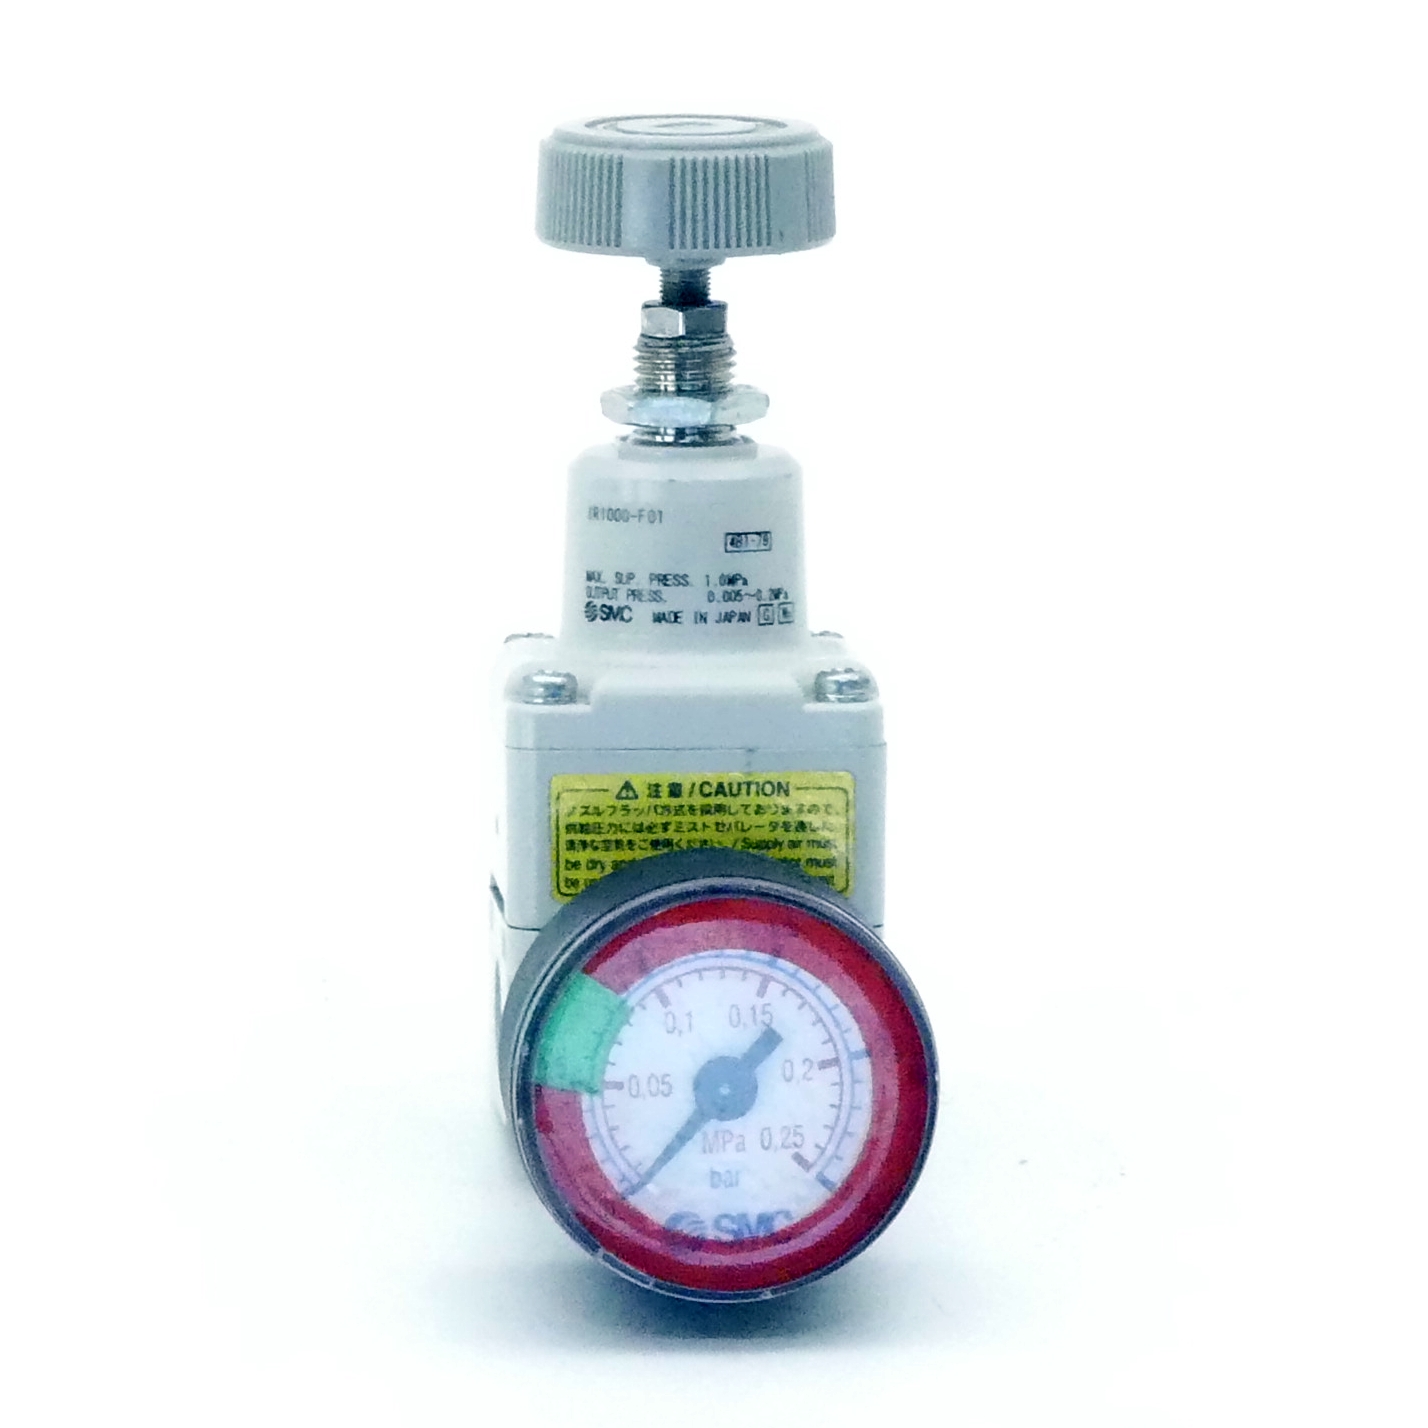 Precision pressure regulator 